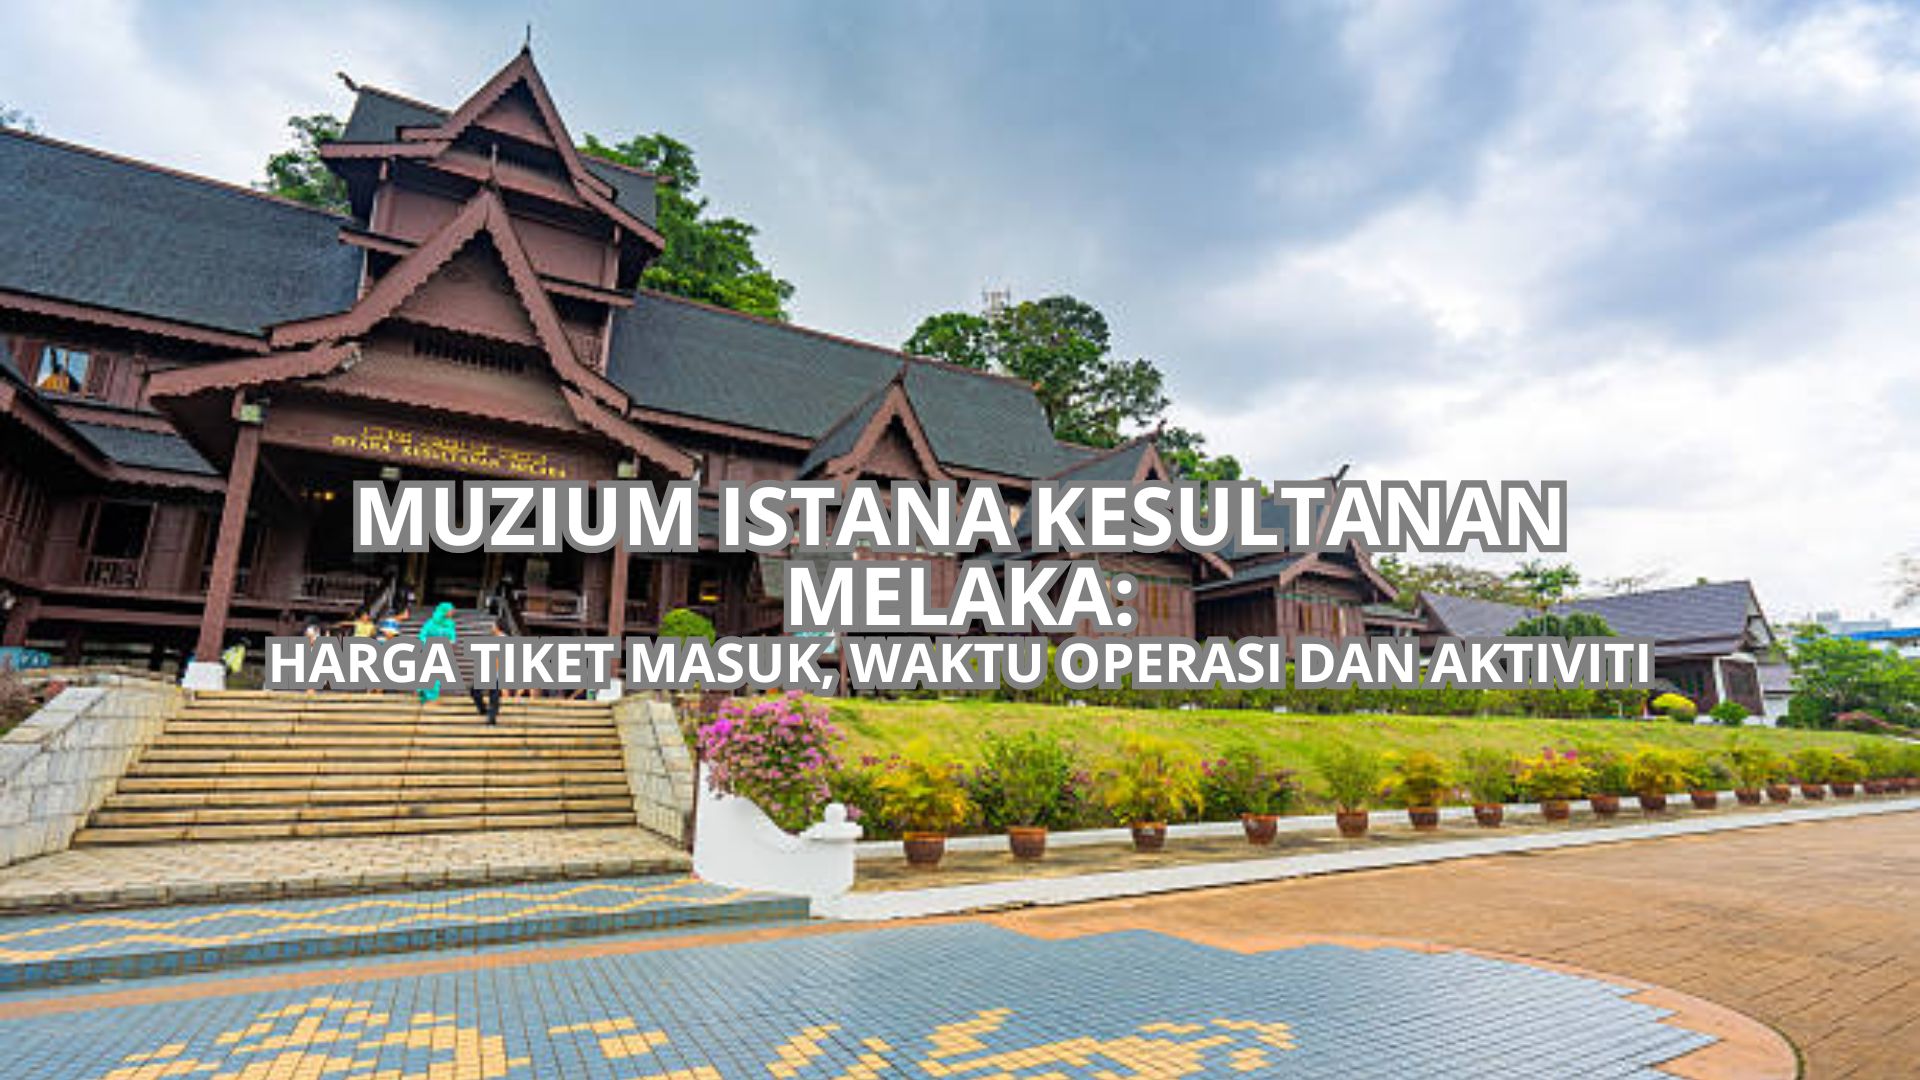 Muzium Istana Kesultanan Melaka Cover